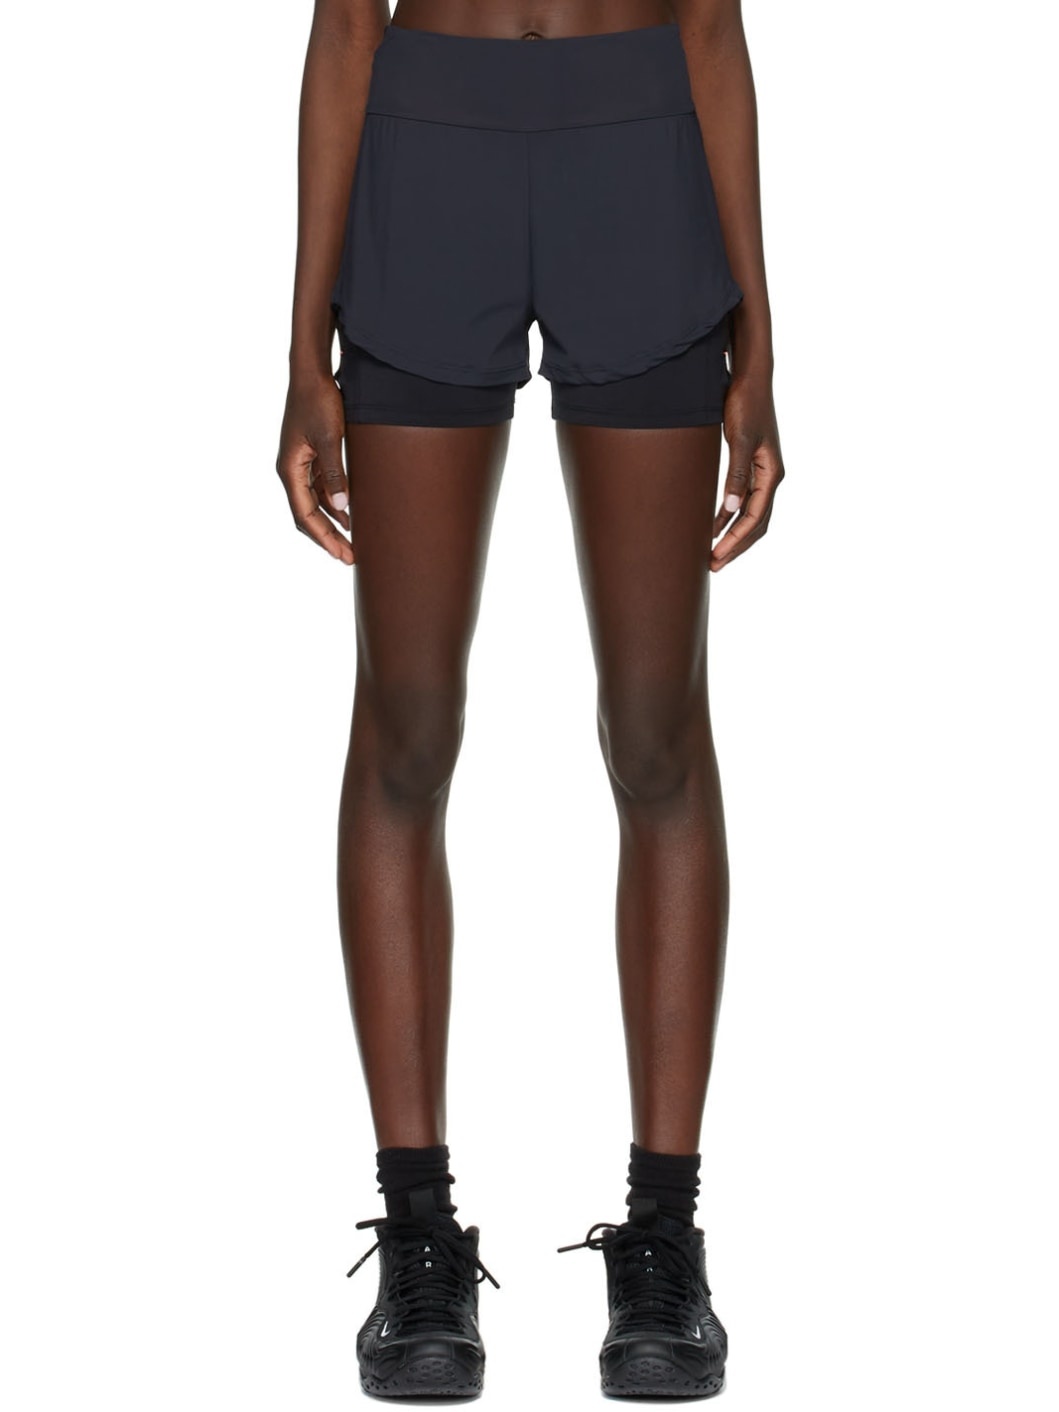 SSENSE Exclusive Black Spandex Sport Shorts - 1